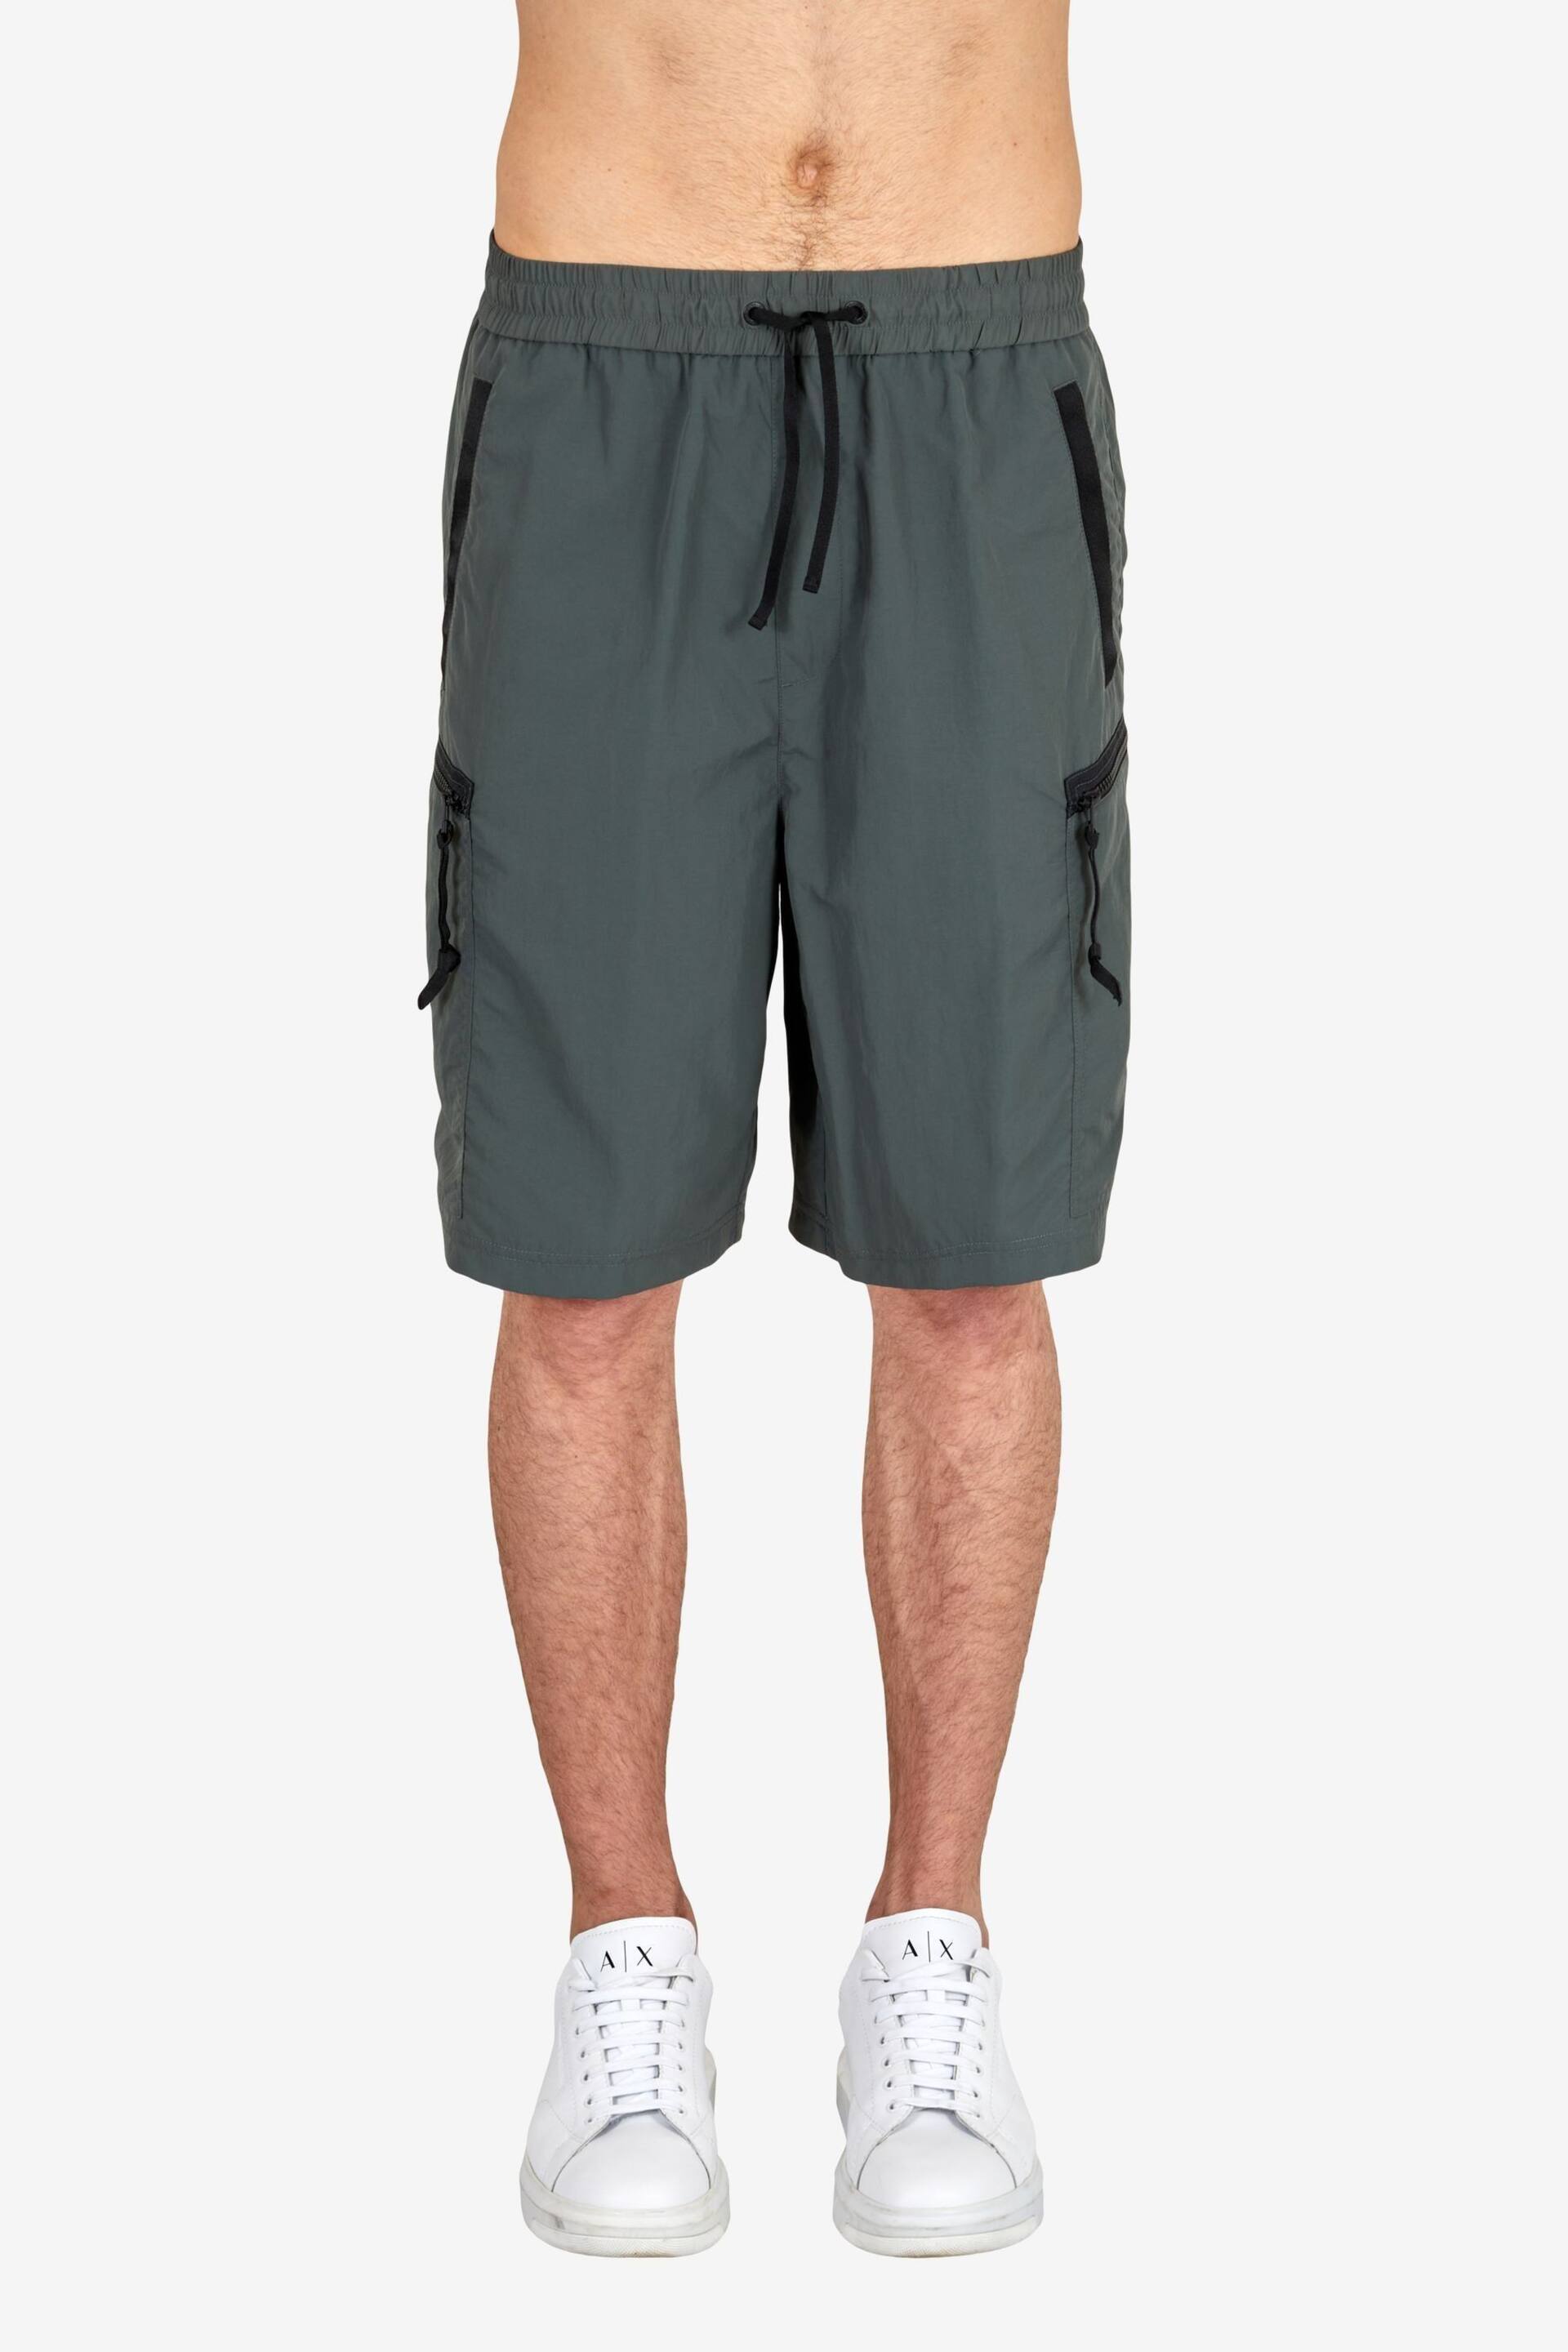 Armani Exchange Dark Grey Cargo Shorts - Image 3 of 8